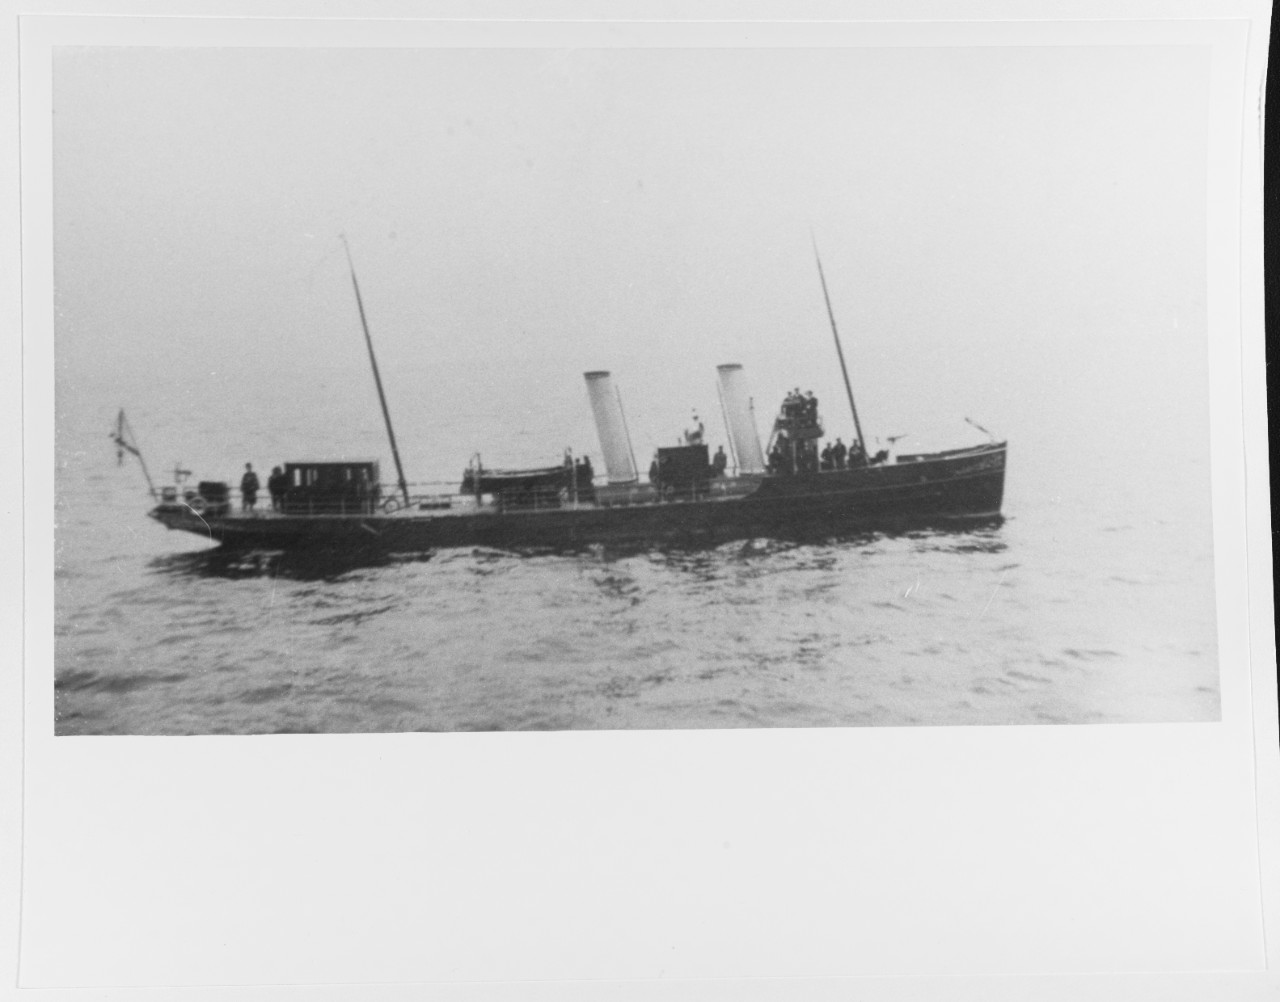 DOZORNI Class patrol Vessel of The Imperial Russian Navy, 1905.